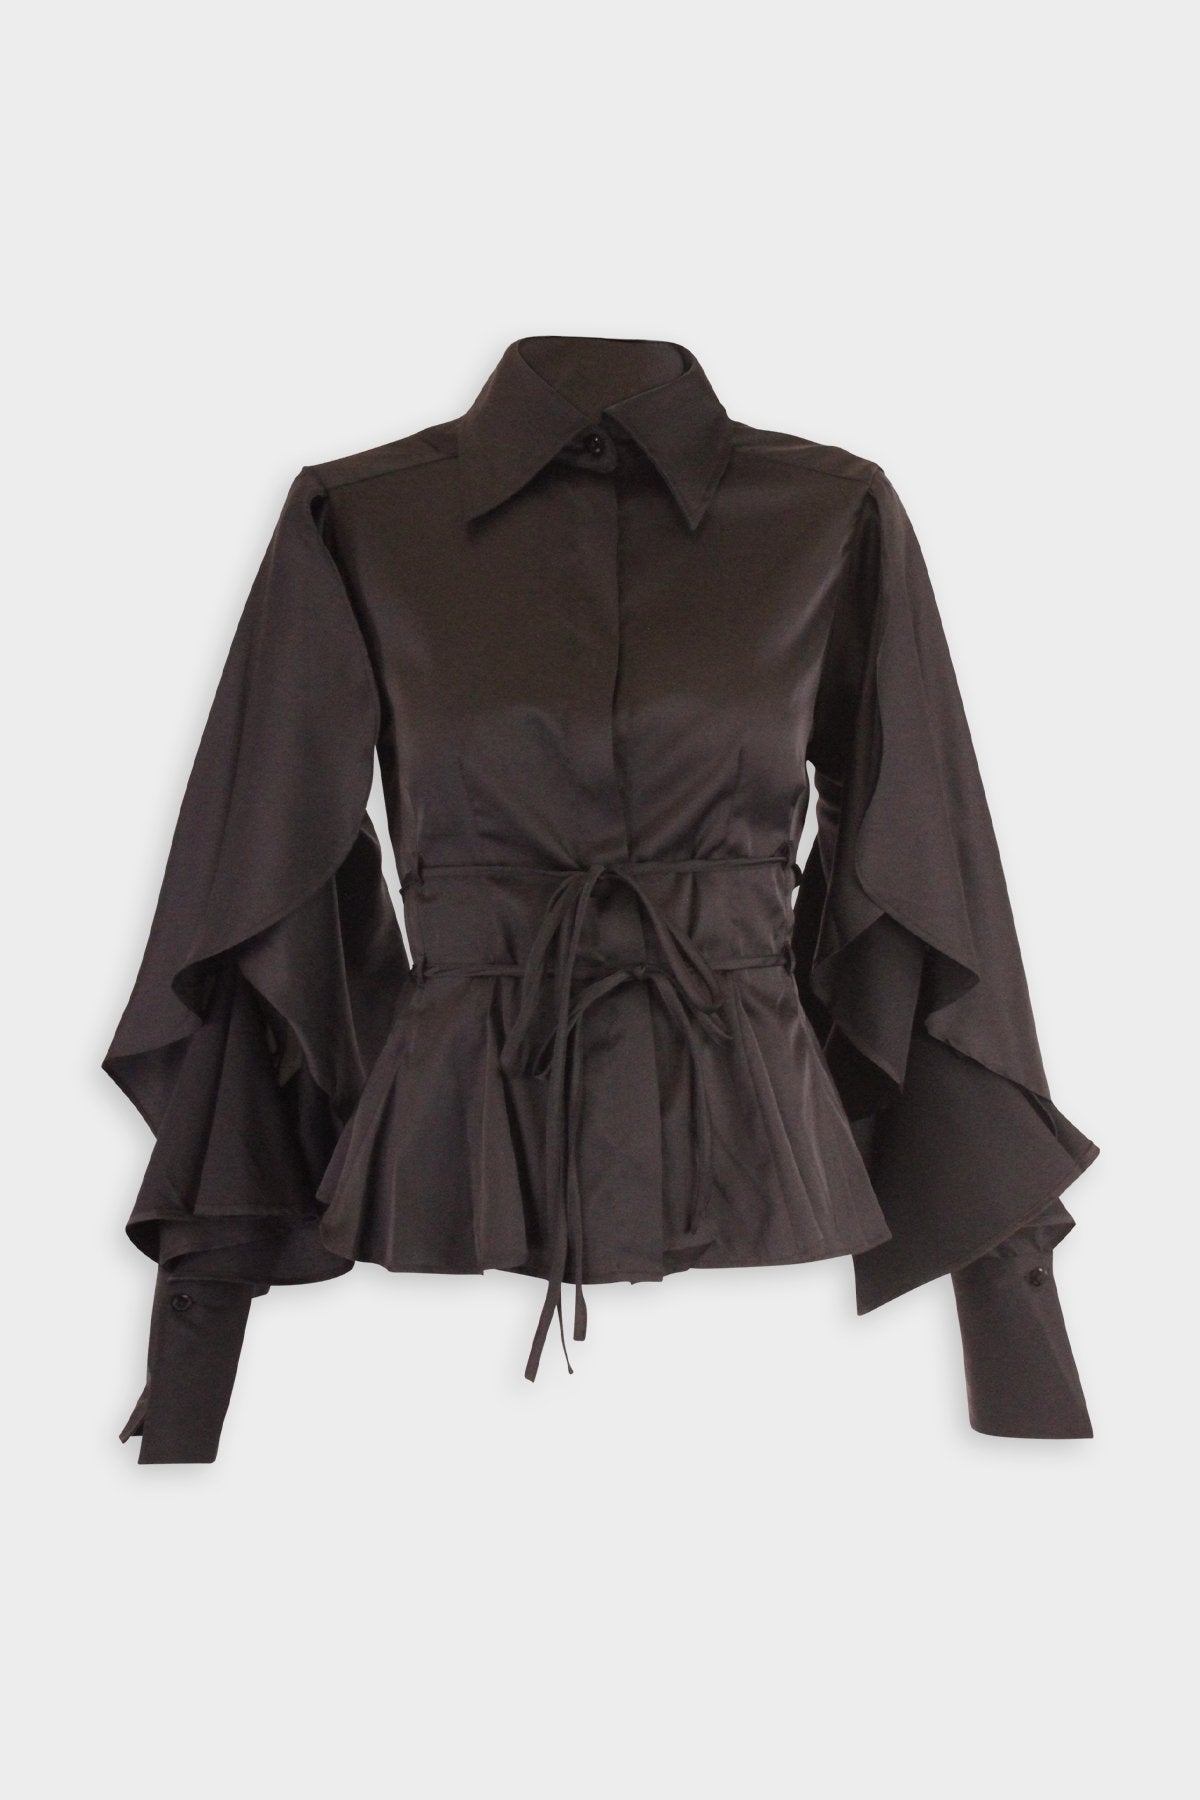 Lacerated Shirt in Black Satin - shop-olivia.com